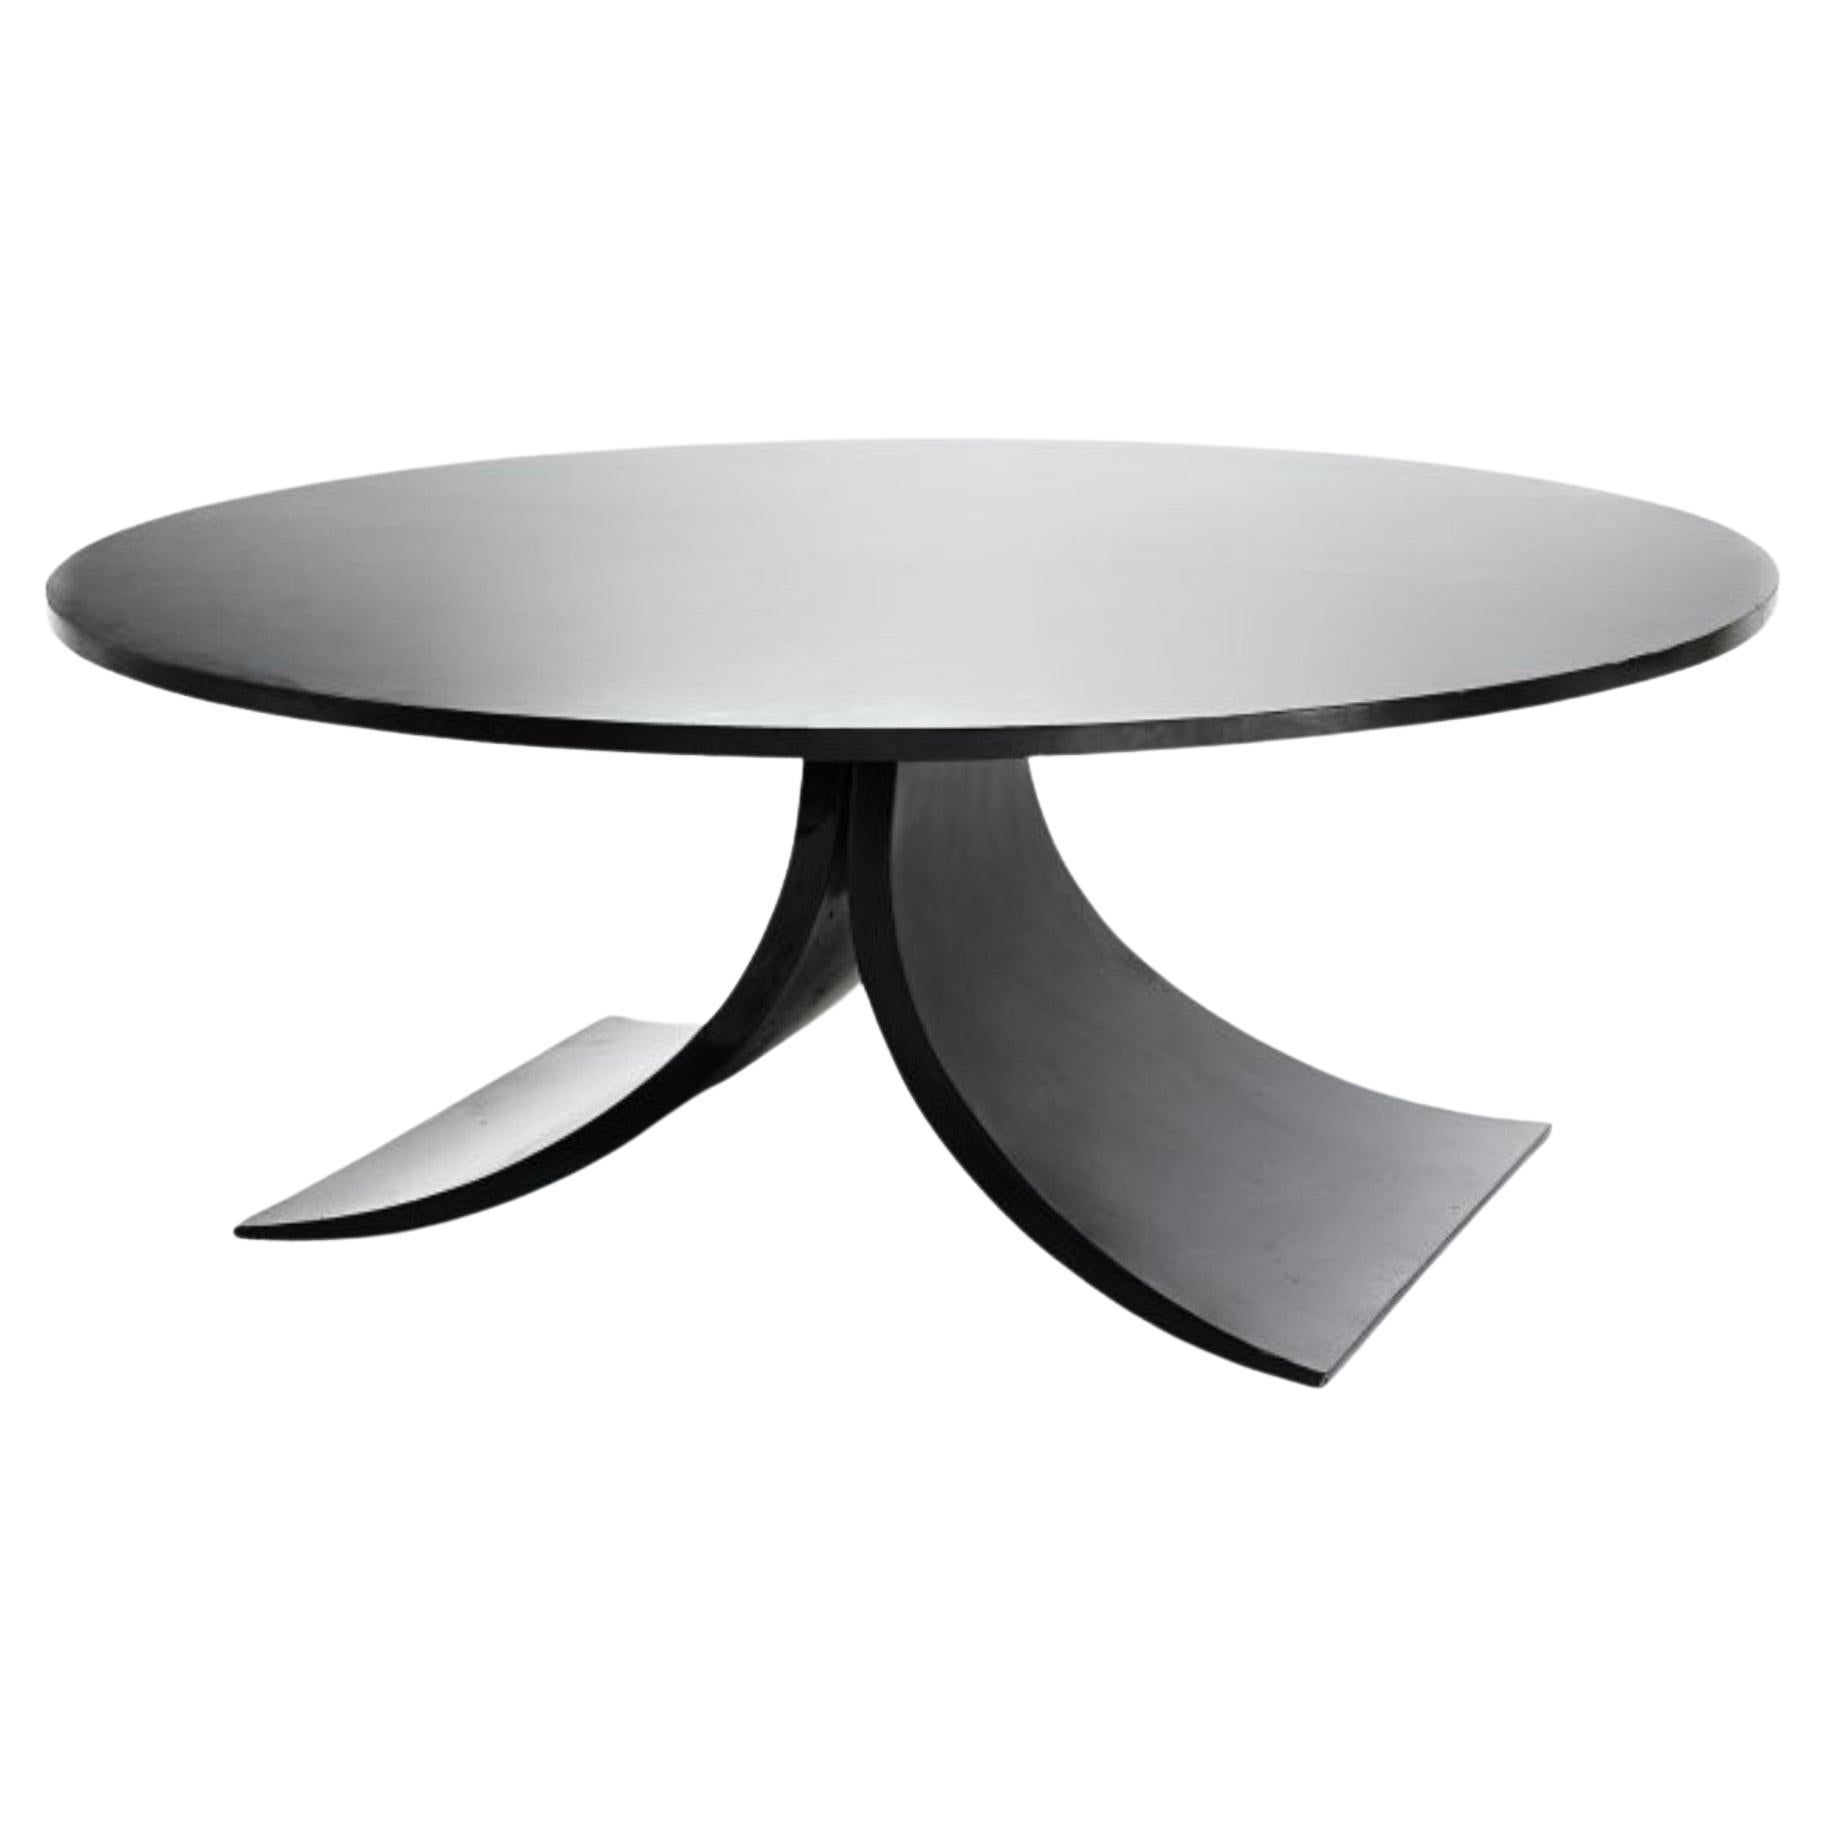 Dinning table model “Mesa redonda” by Oscar Niemeyer, Brazil, 1971